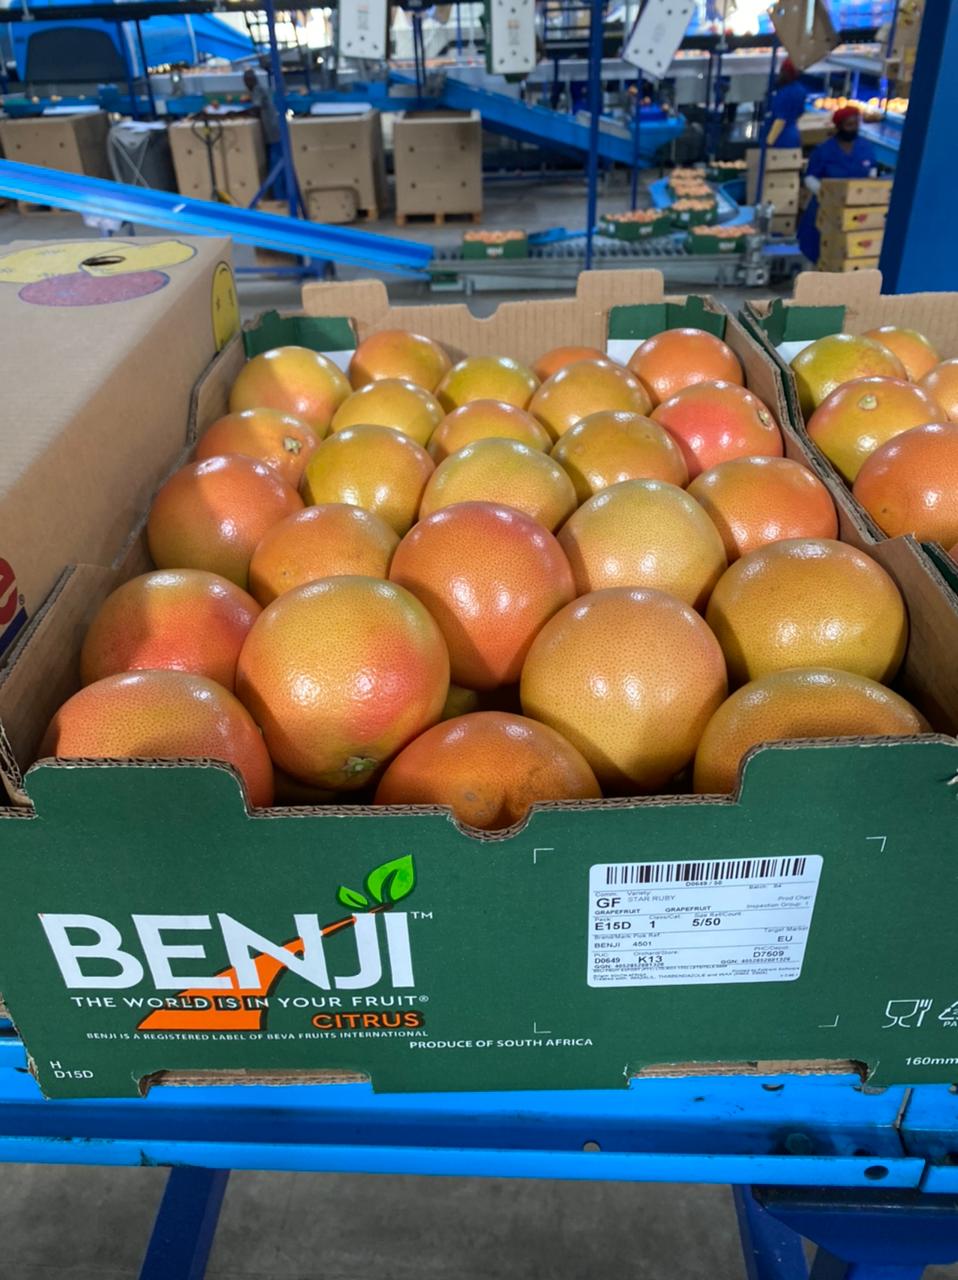 Box of grapefruits being shipped by Benji - Beva Fruits International (BFI)